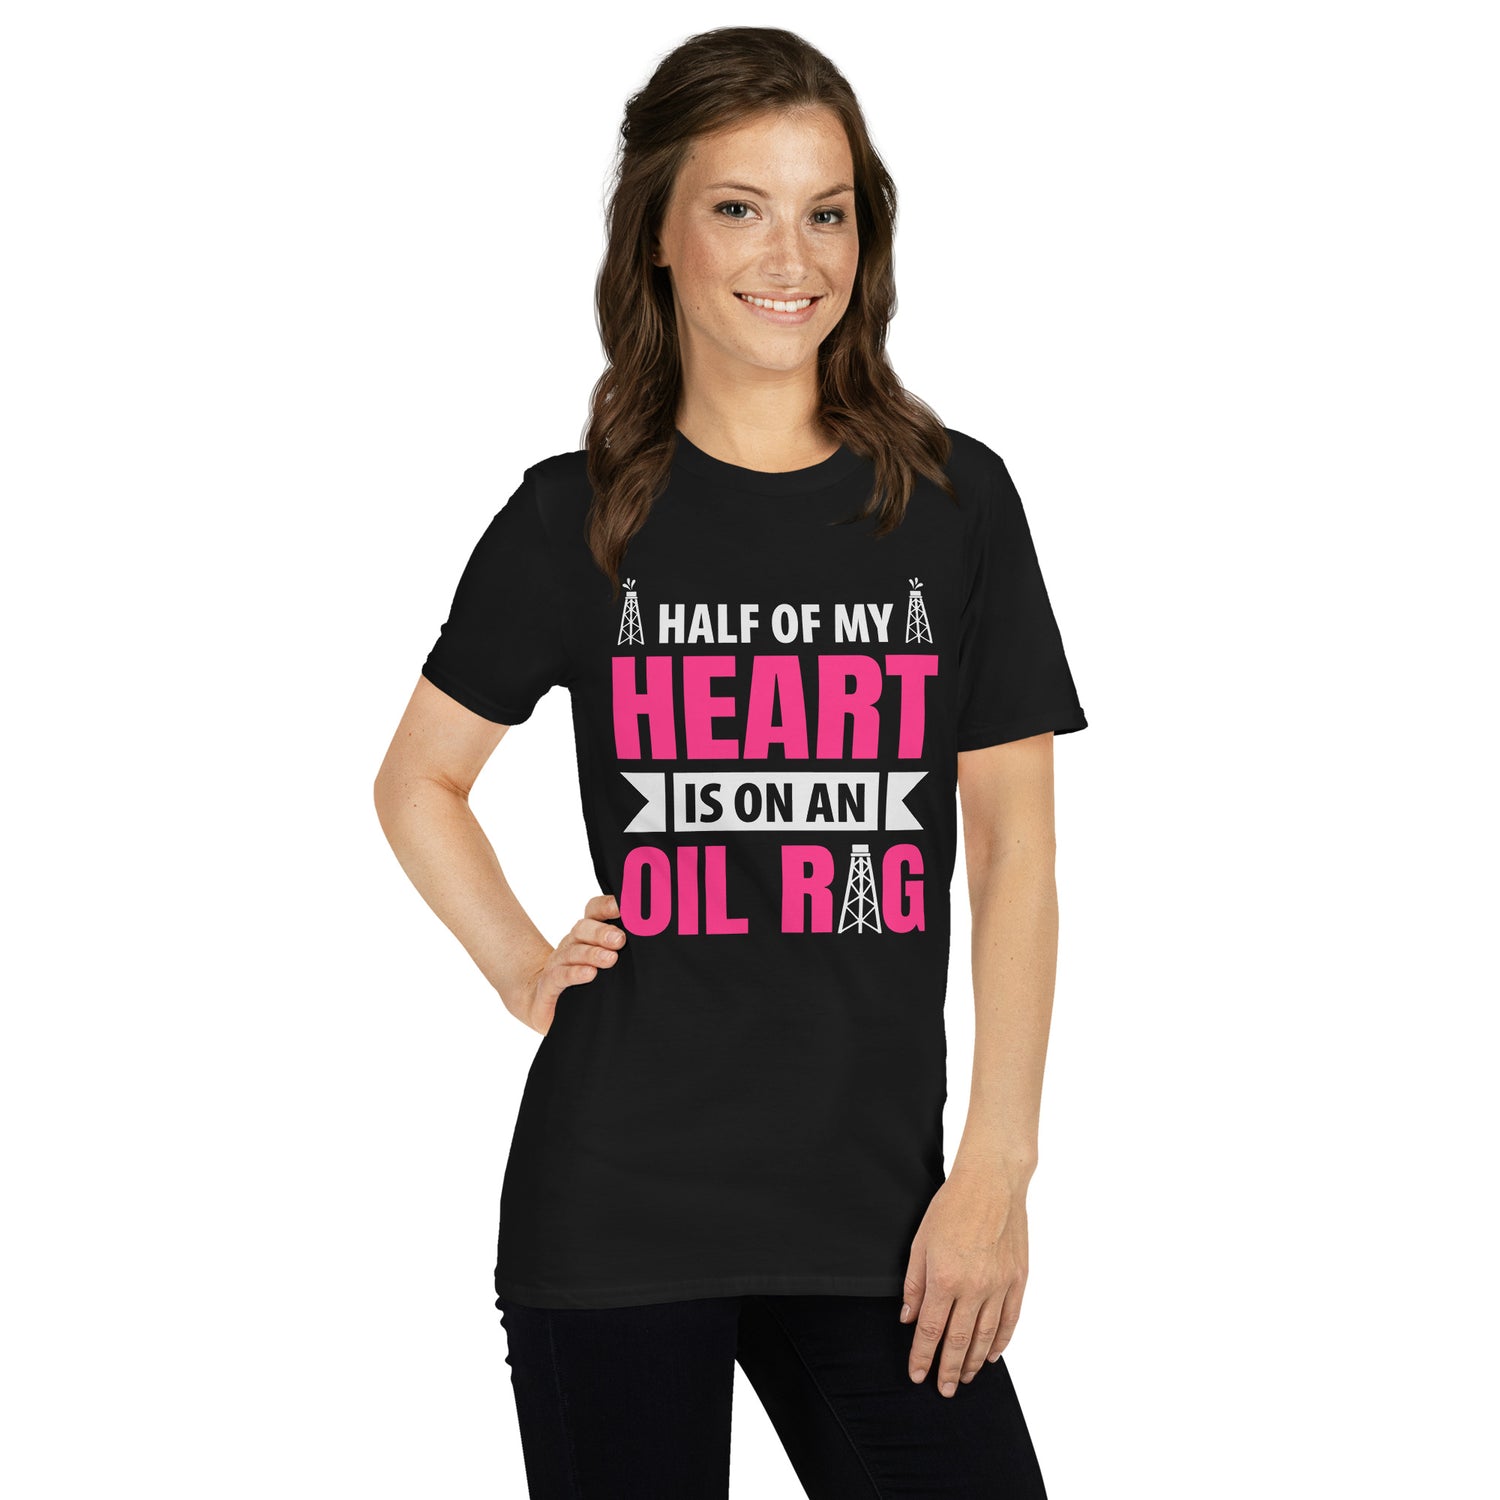 Half my heart is on an oil rig - women's T-Shirt